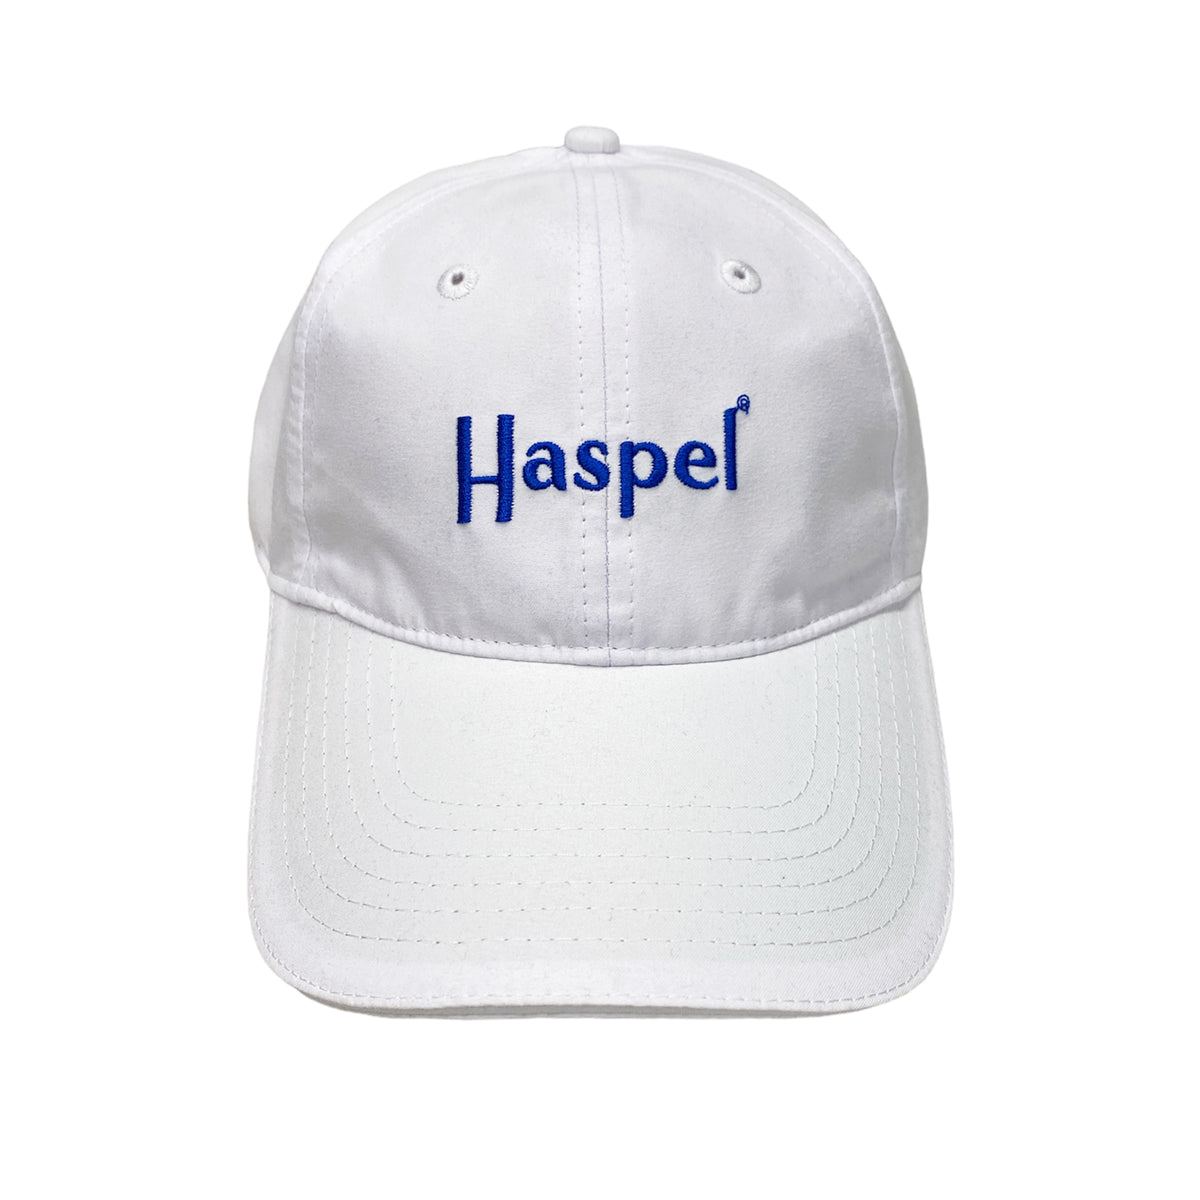 Haspel Performance Hat - White